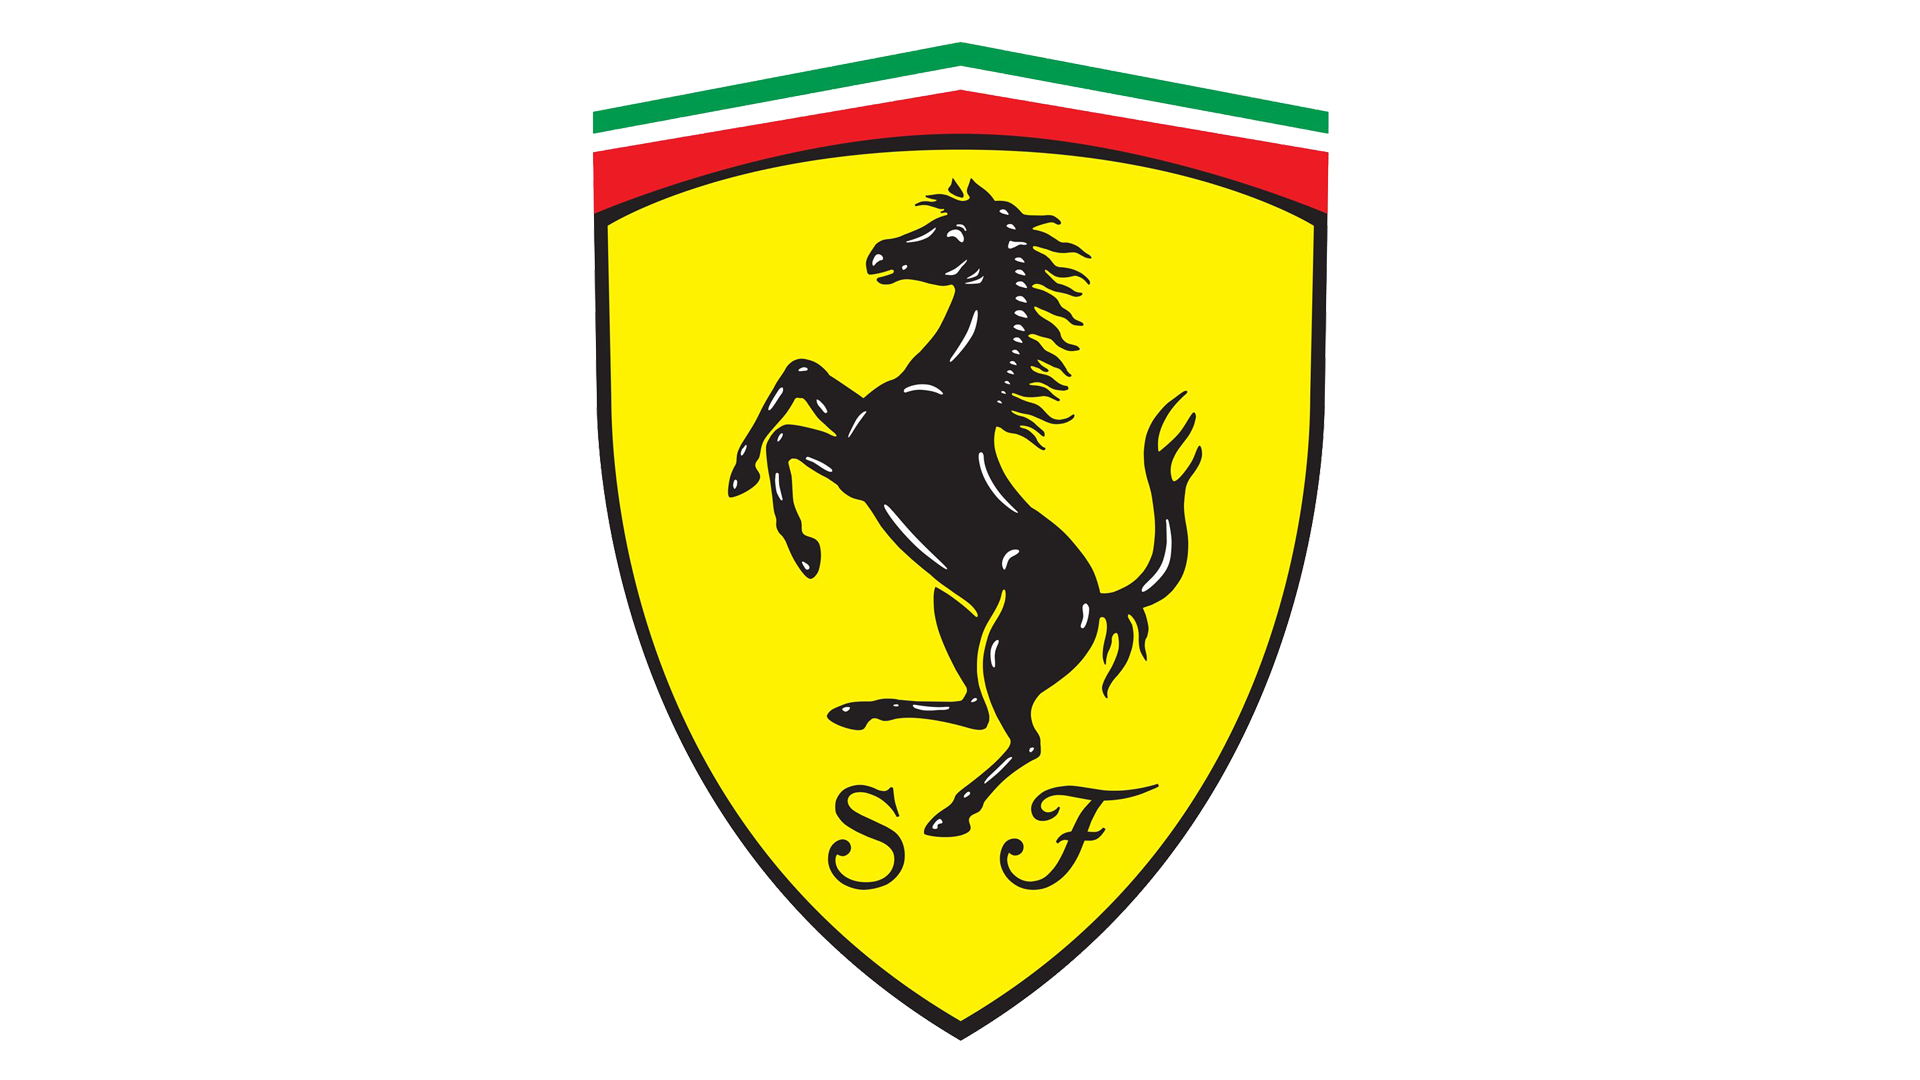 Машина с лошадью на эмблеме. Скудерия Феррари. Феррари значок машины. Scuderia Ferrari logo. Эмблема лошади на автомобиле.